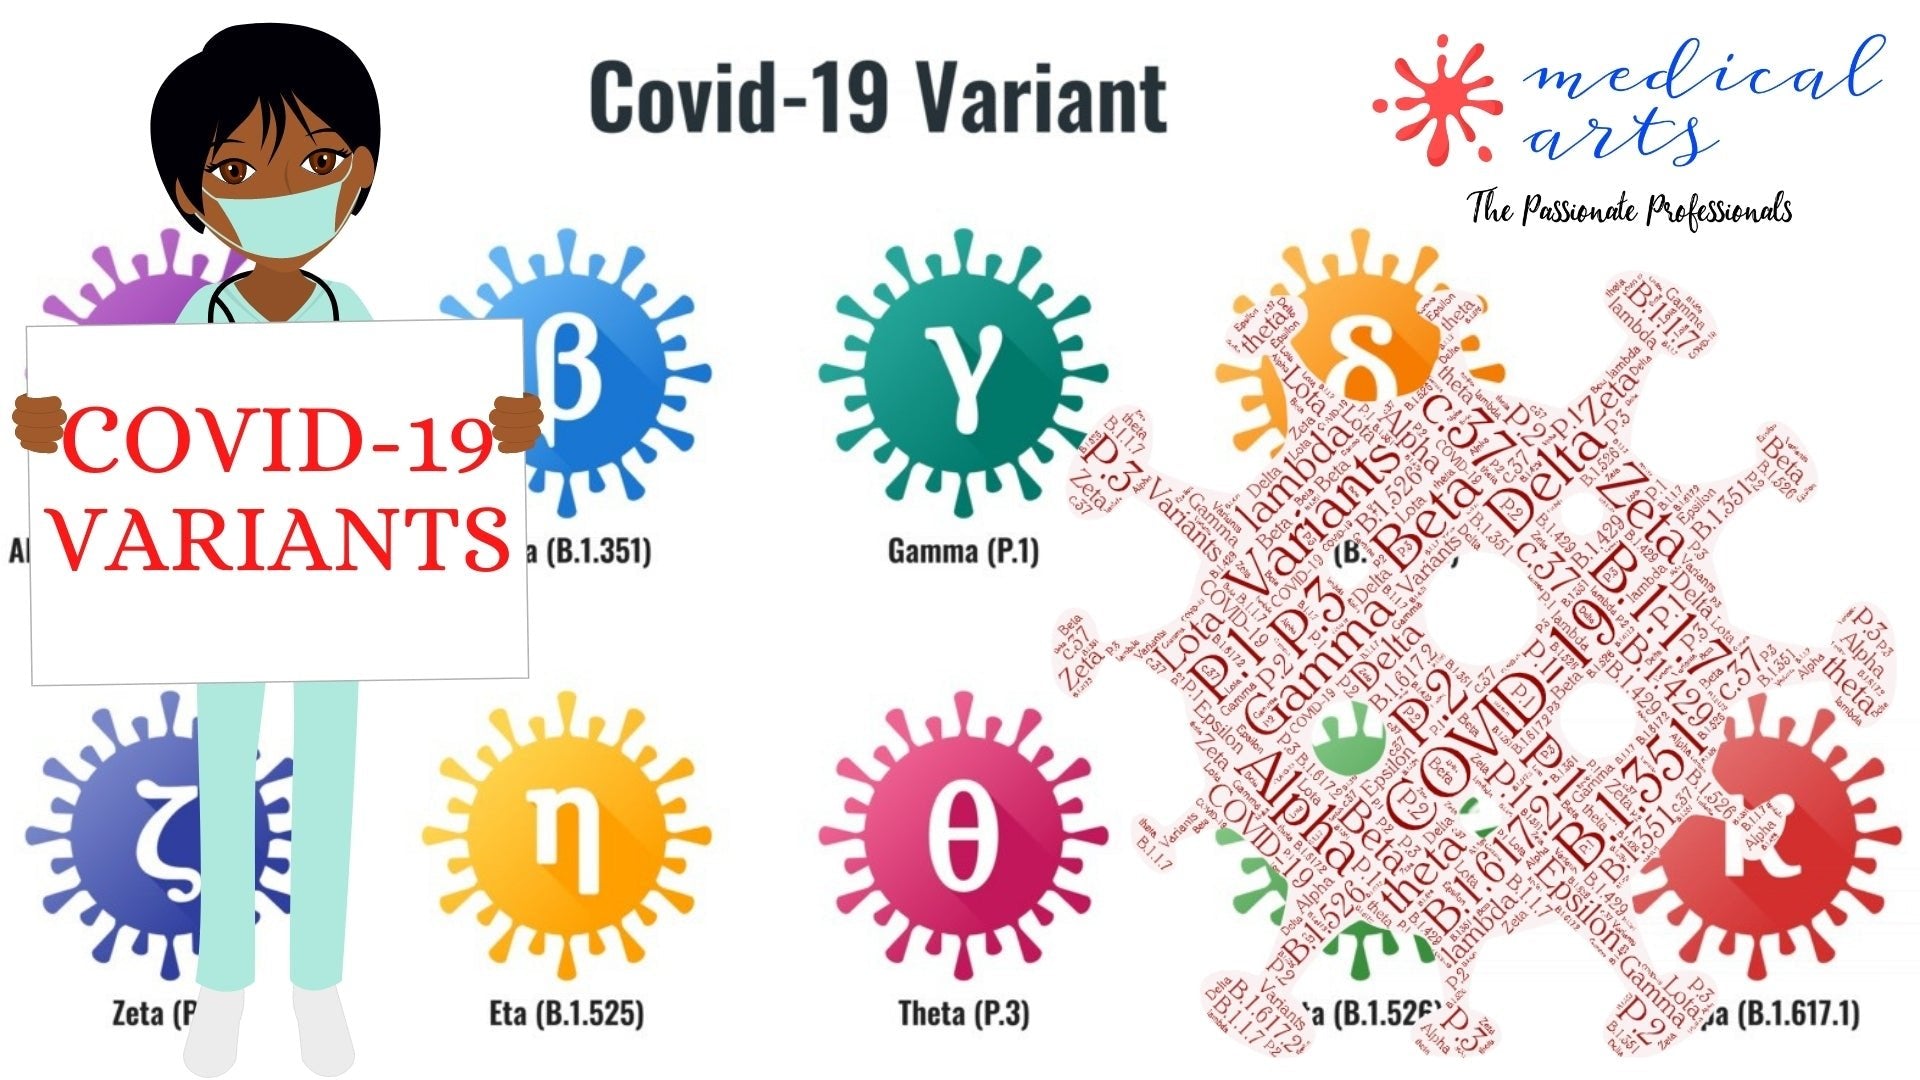 COVID-19 Variants explained - Variants of concern vs Variants of interest - characteristics of each variant/mutation.